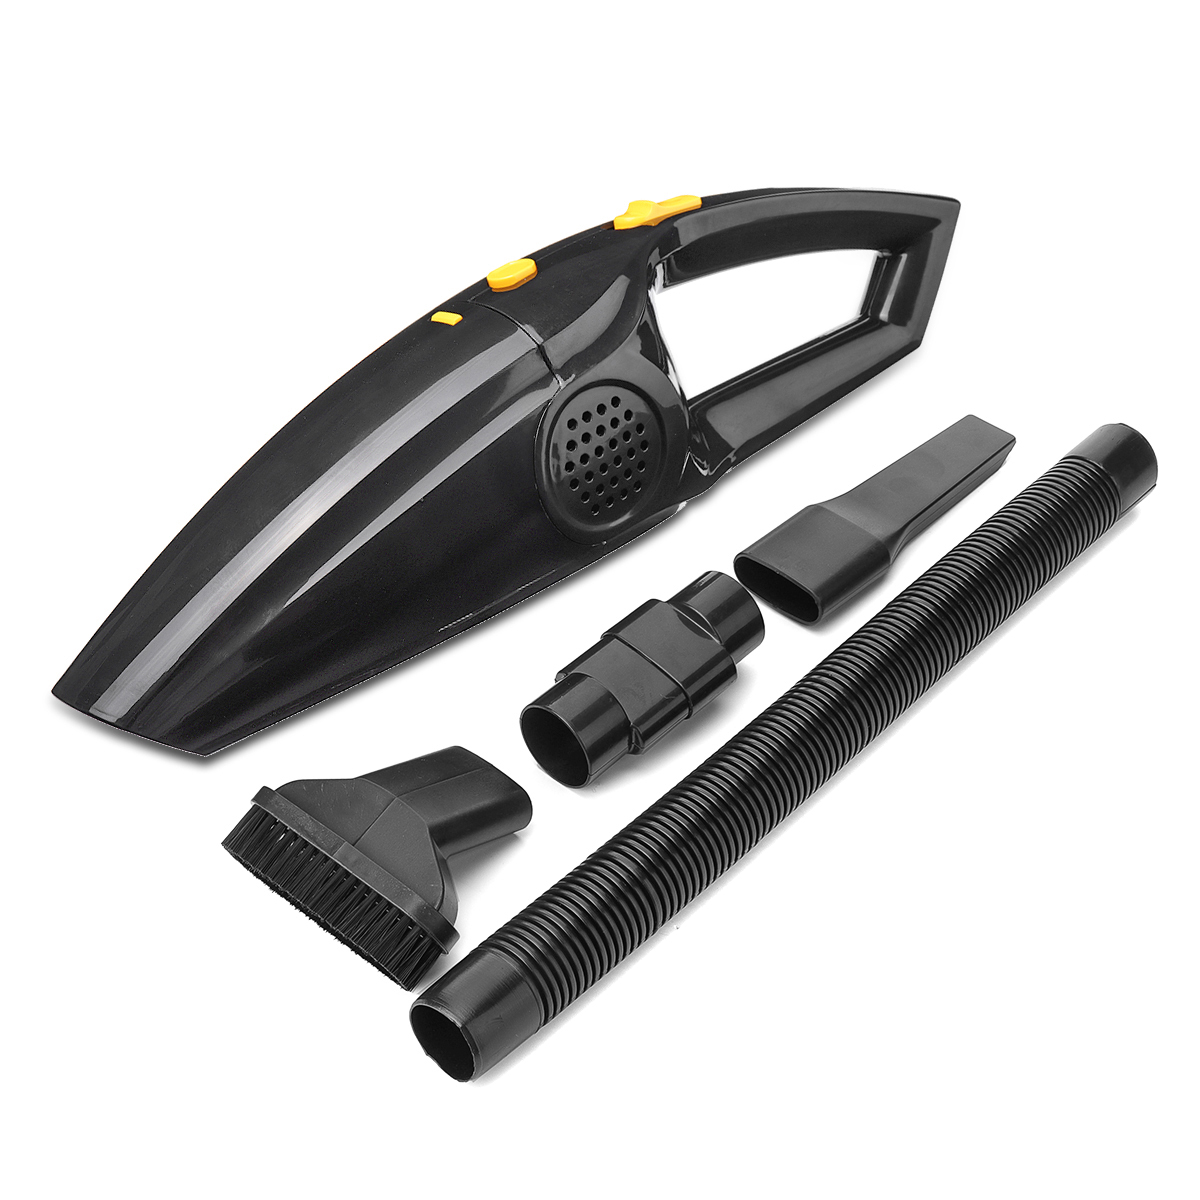 Portable-Vacuum-Cleaner-12V-Cordless-Portable-Handheld-Wet-Dry-Dust-Cleaner-1359349-10